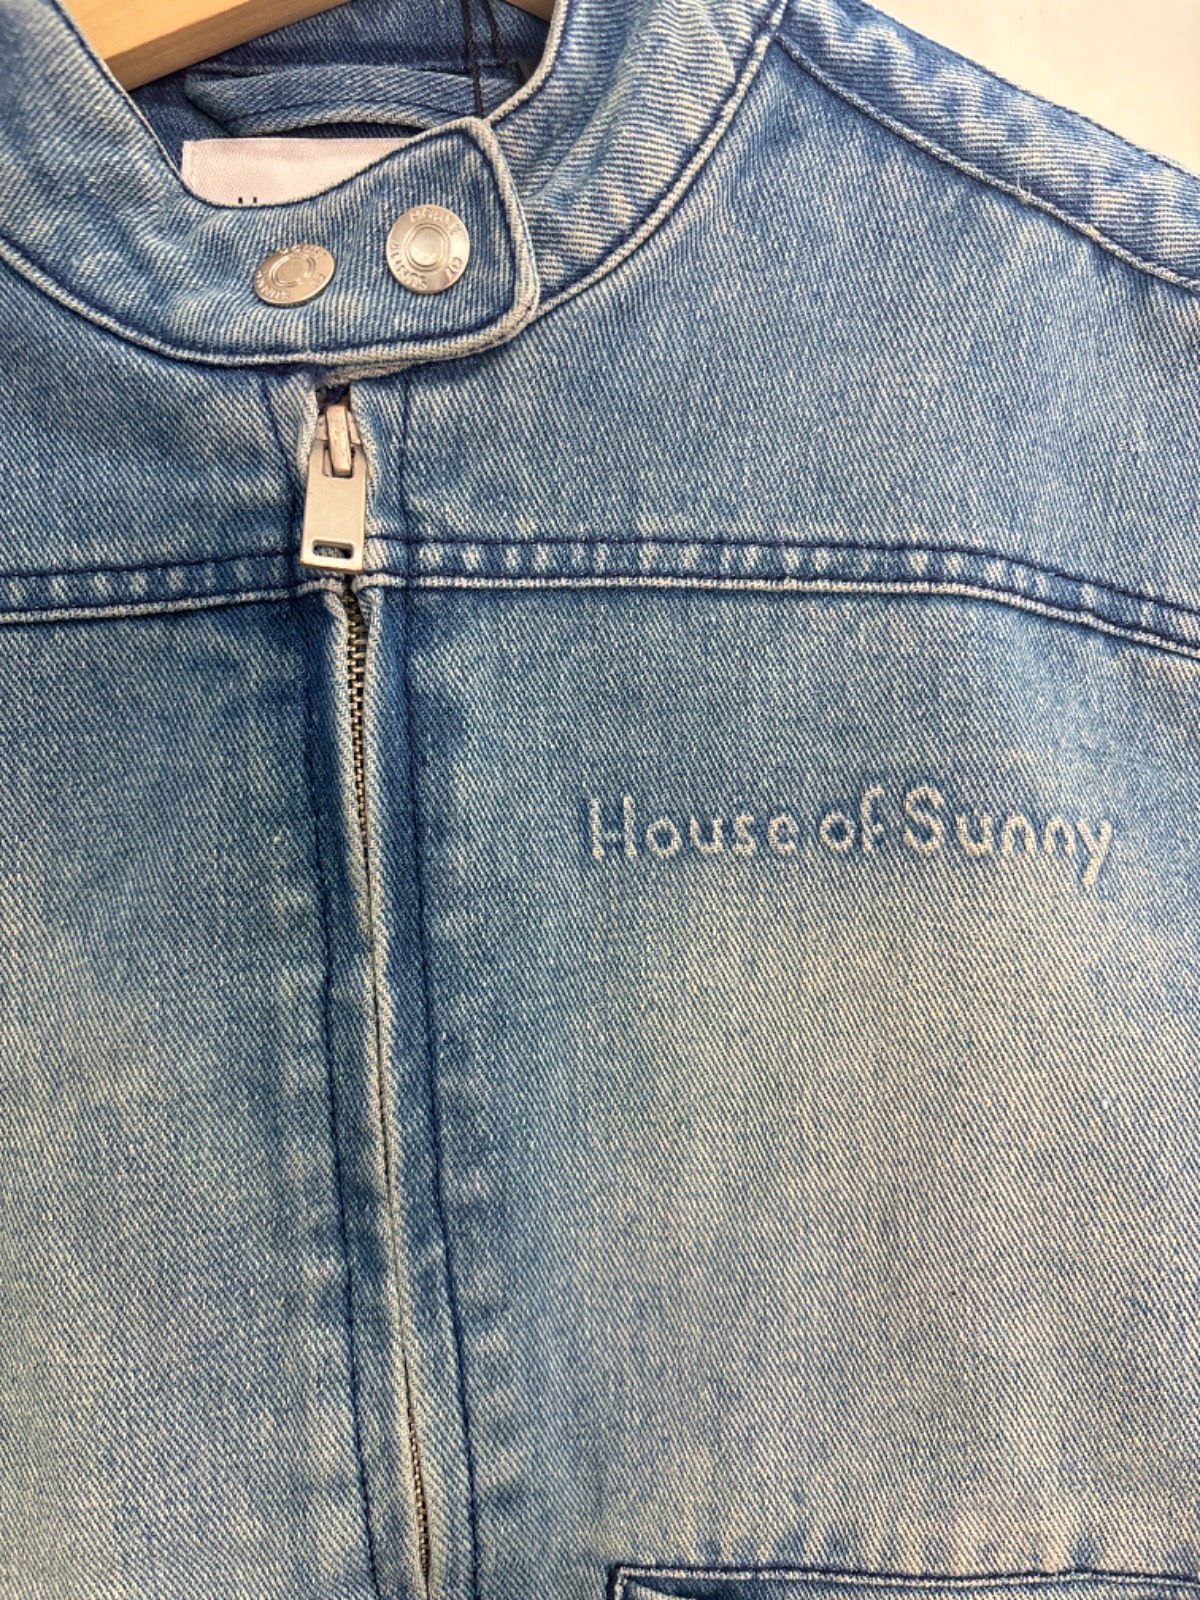 House of Sunny Blue Cropped Boxy Racing Jacket with Branding UK 8